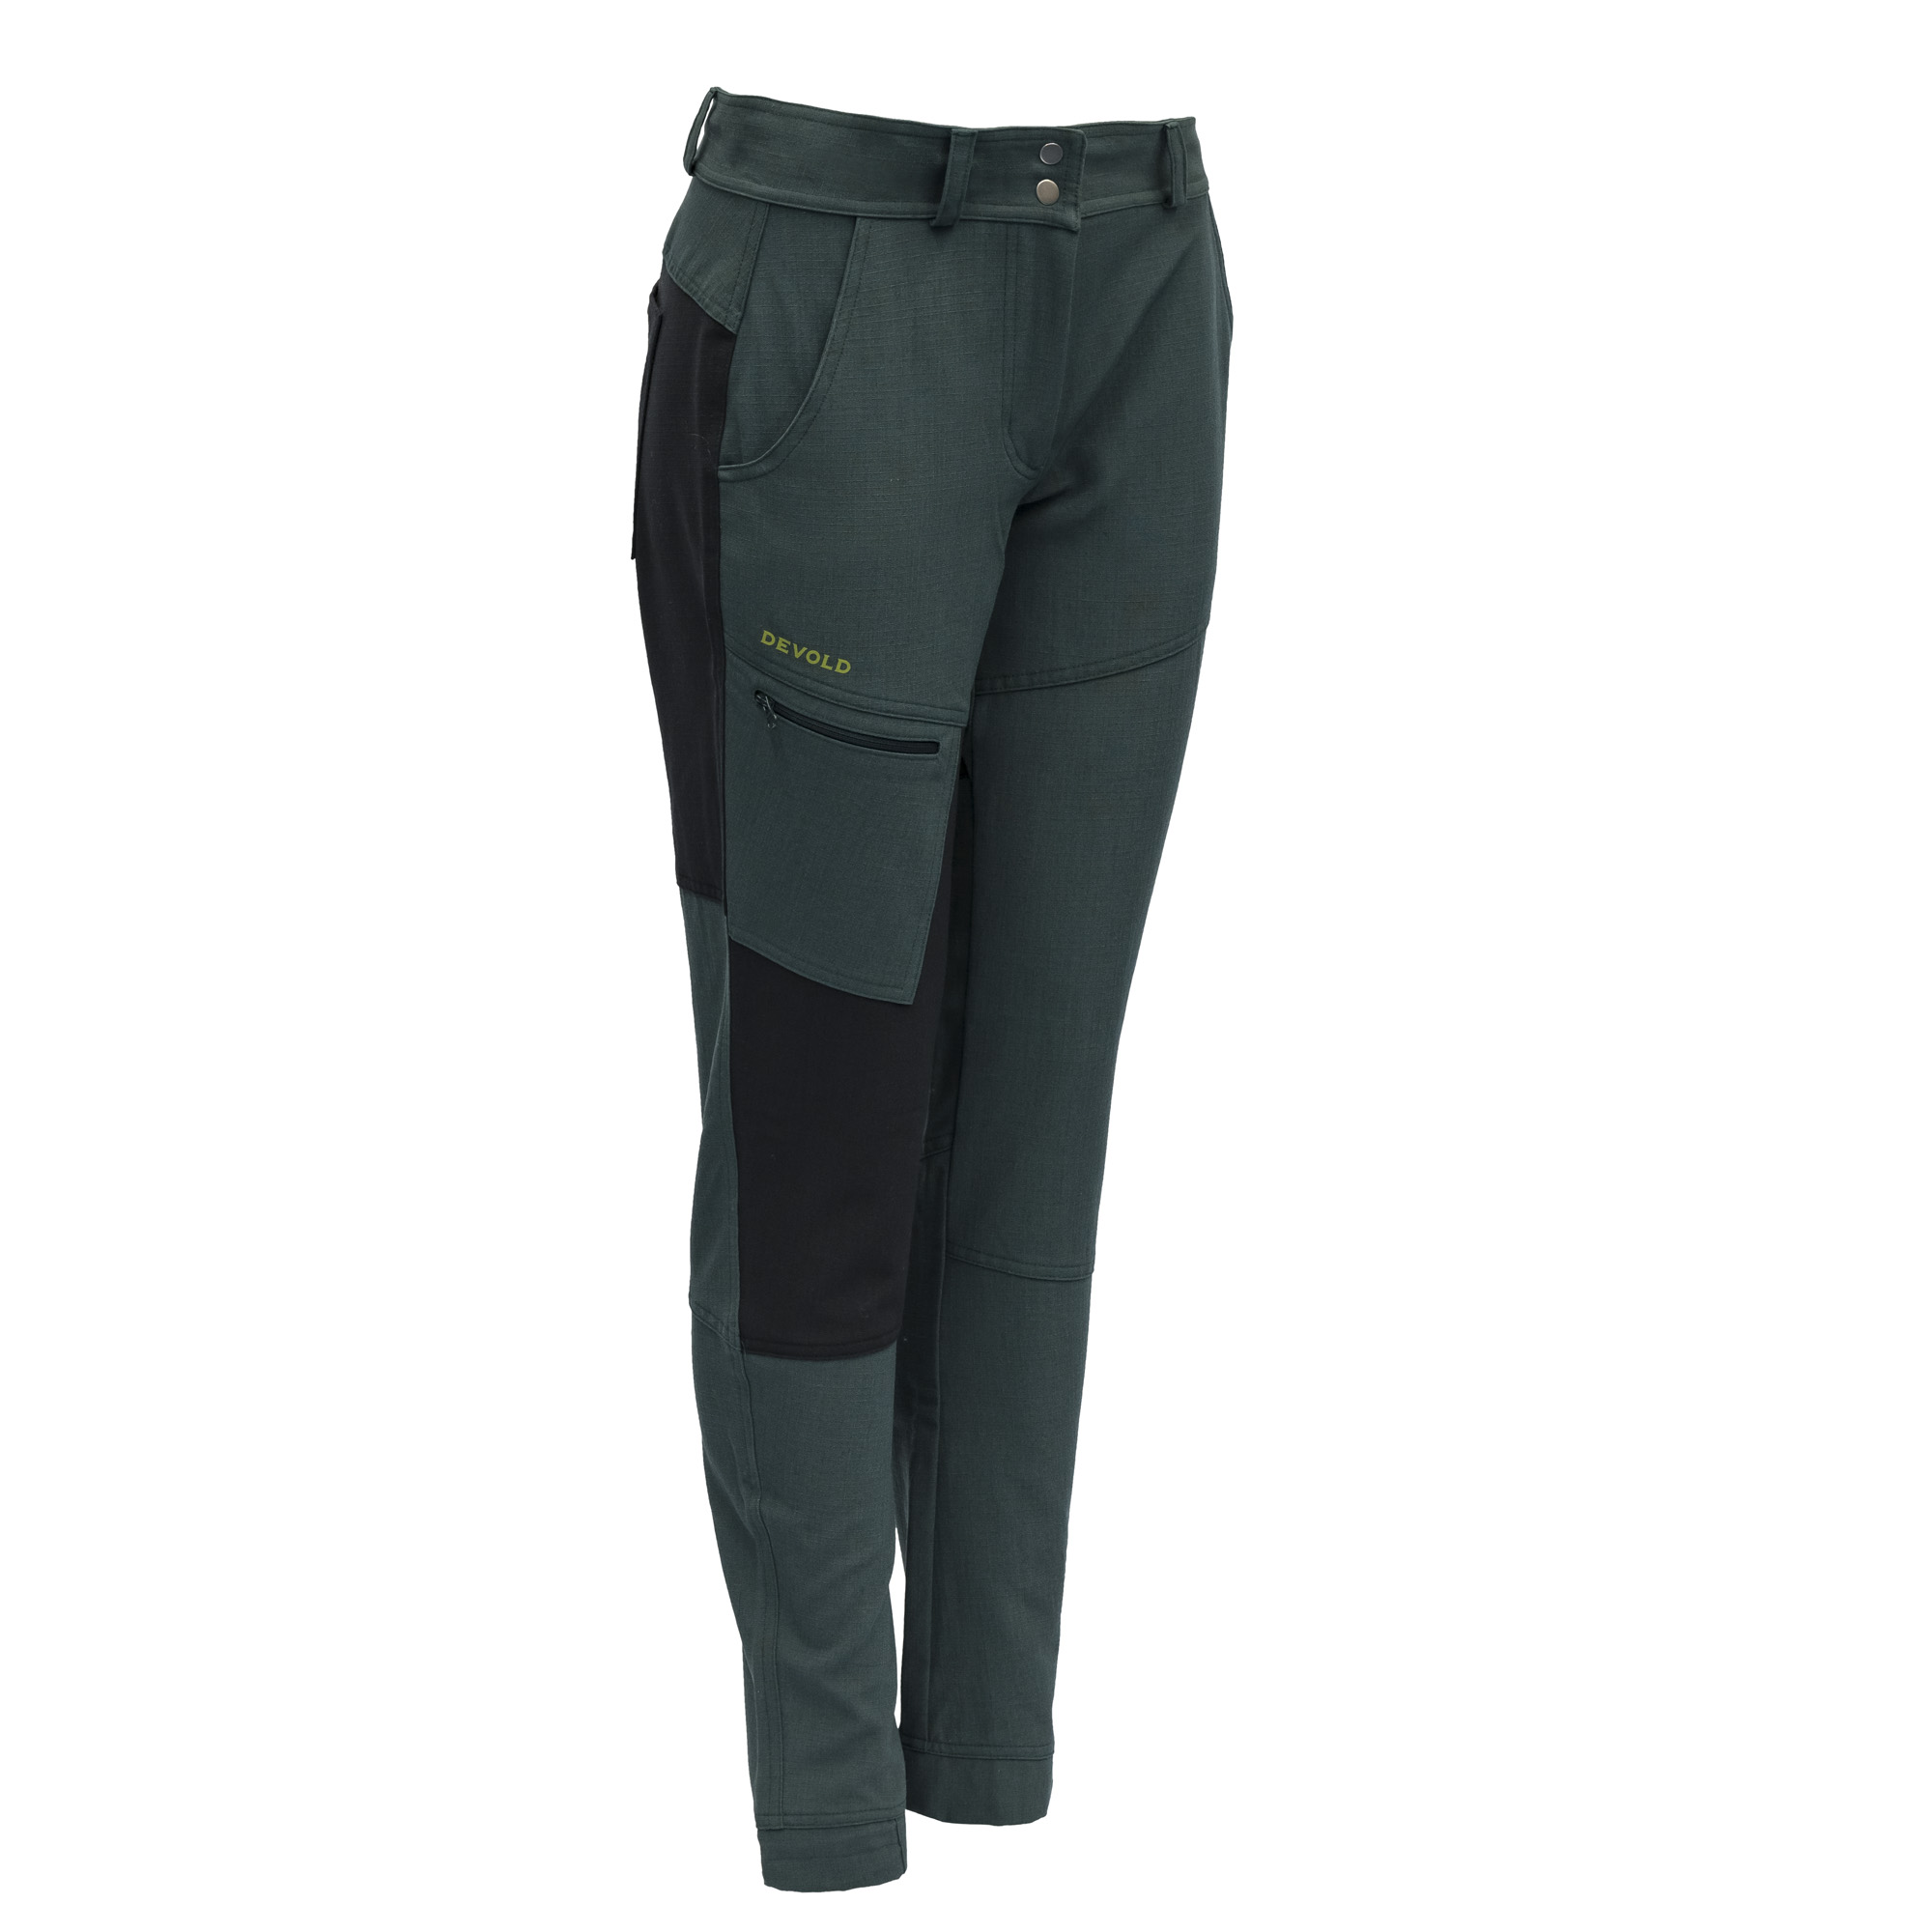 Men's merino trousers - khaki | Black hill outdoor